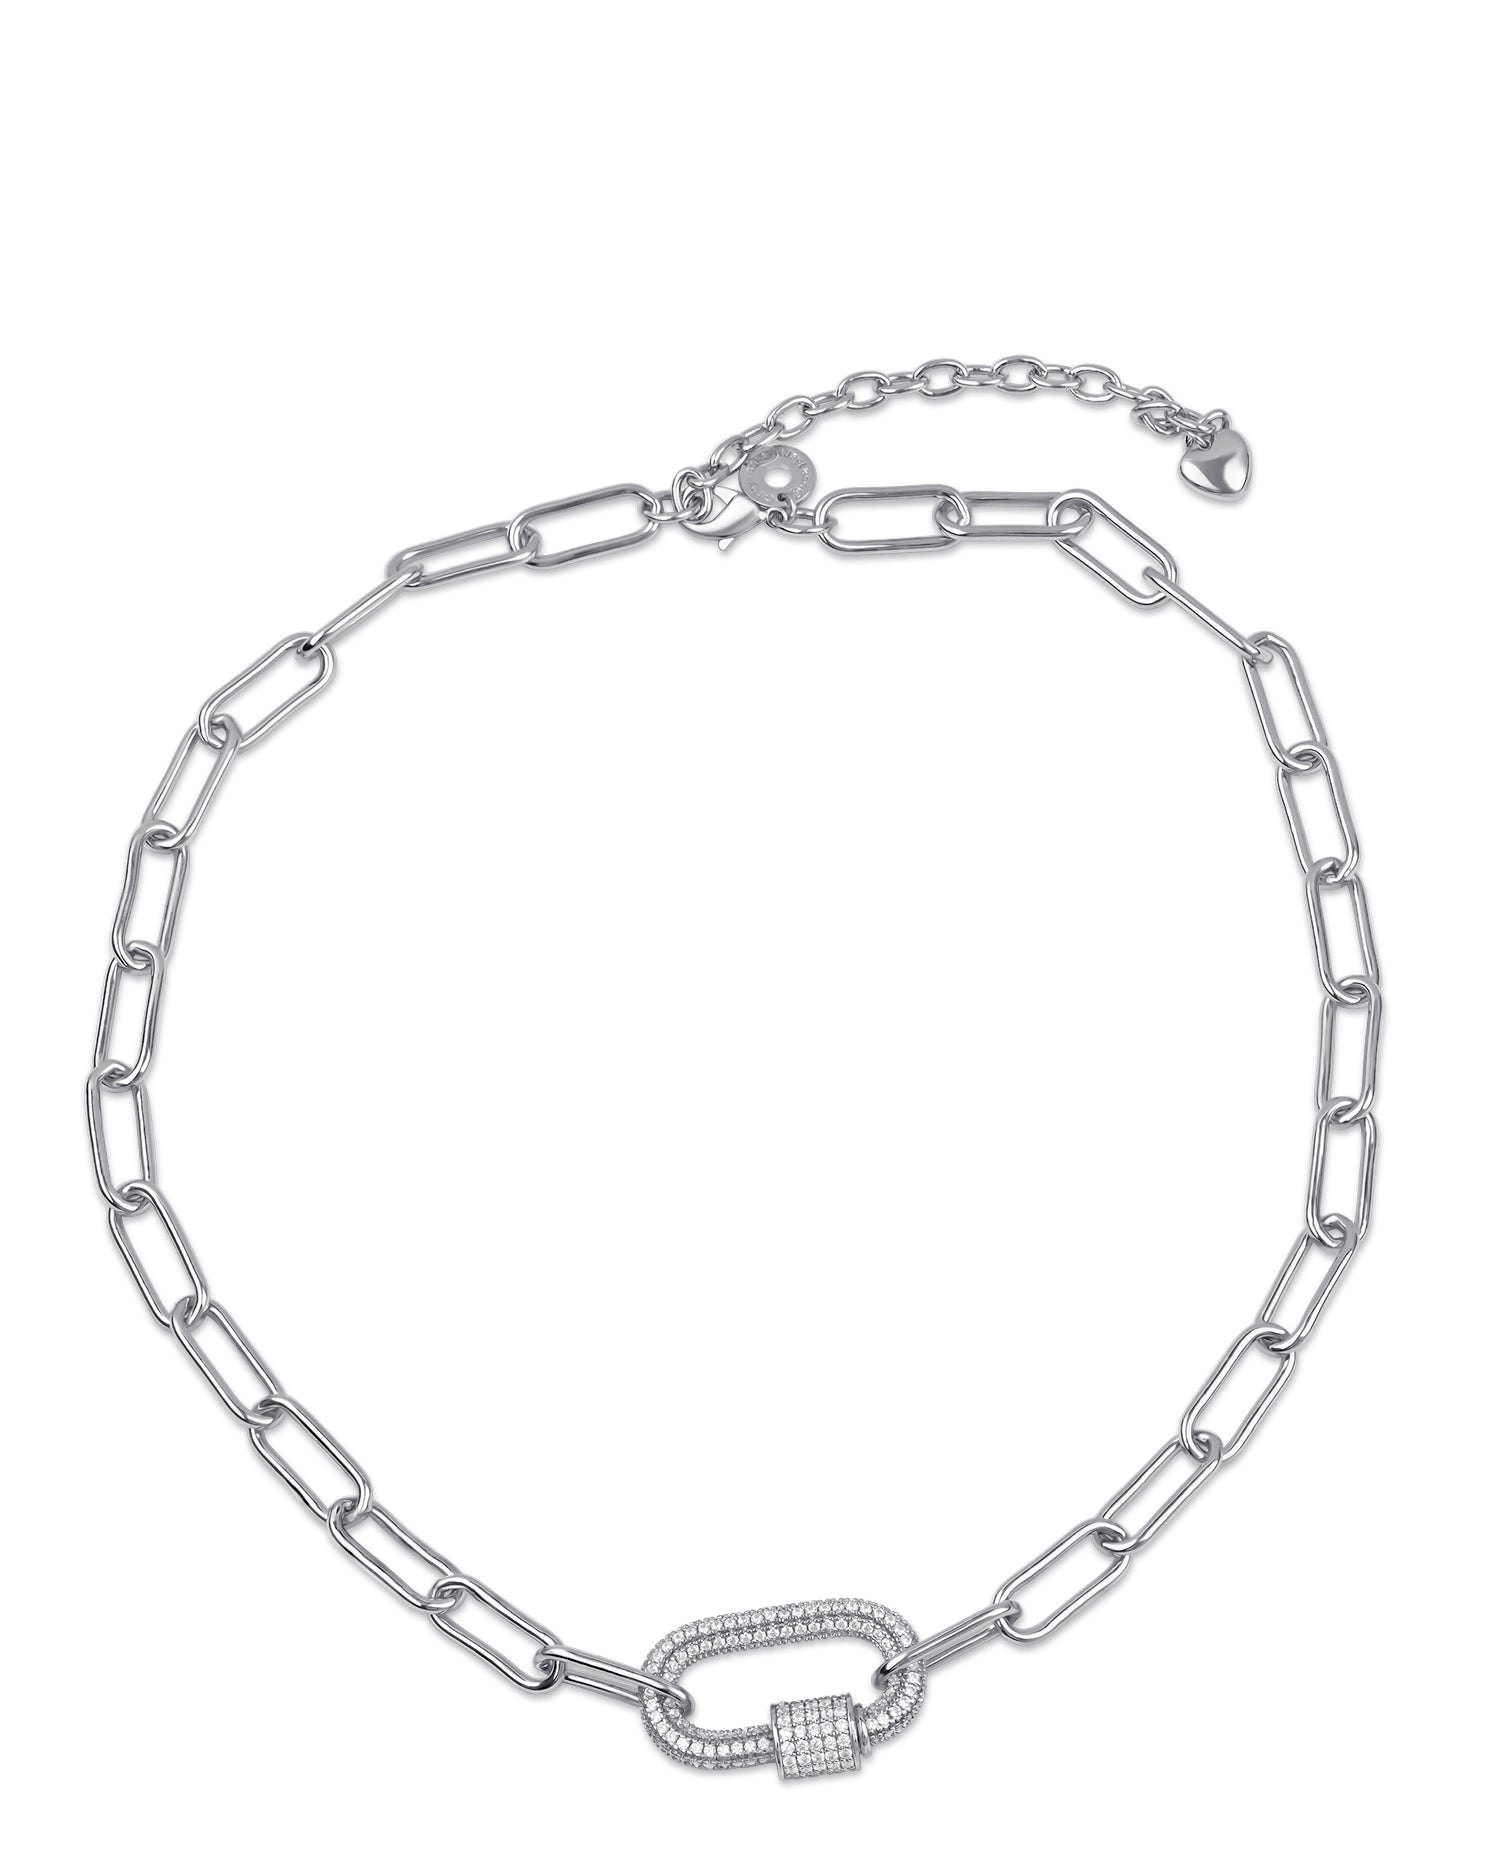 Diamond Chain Necklace, Long | CELLINI JEWELERS